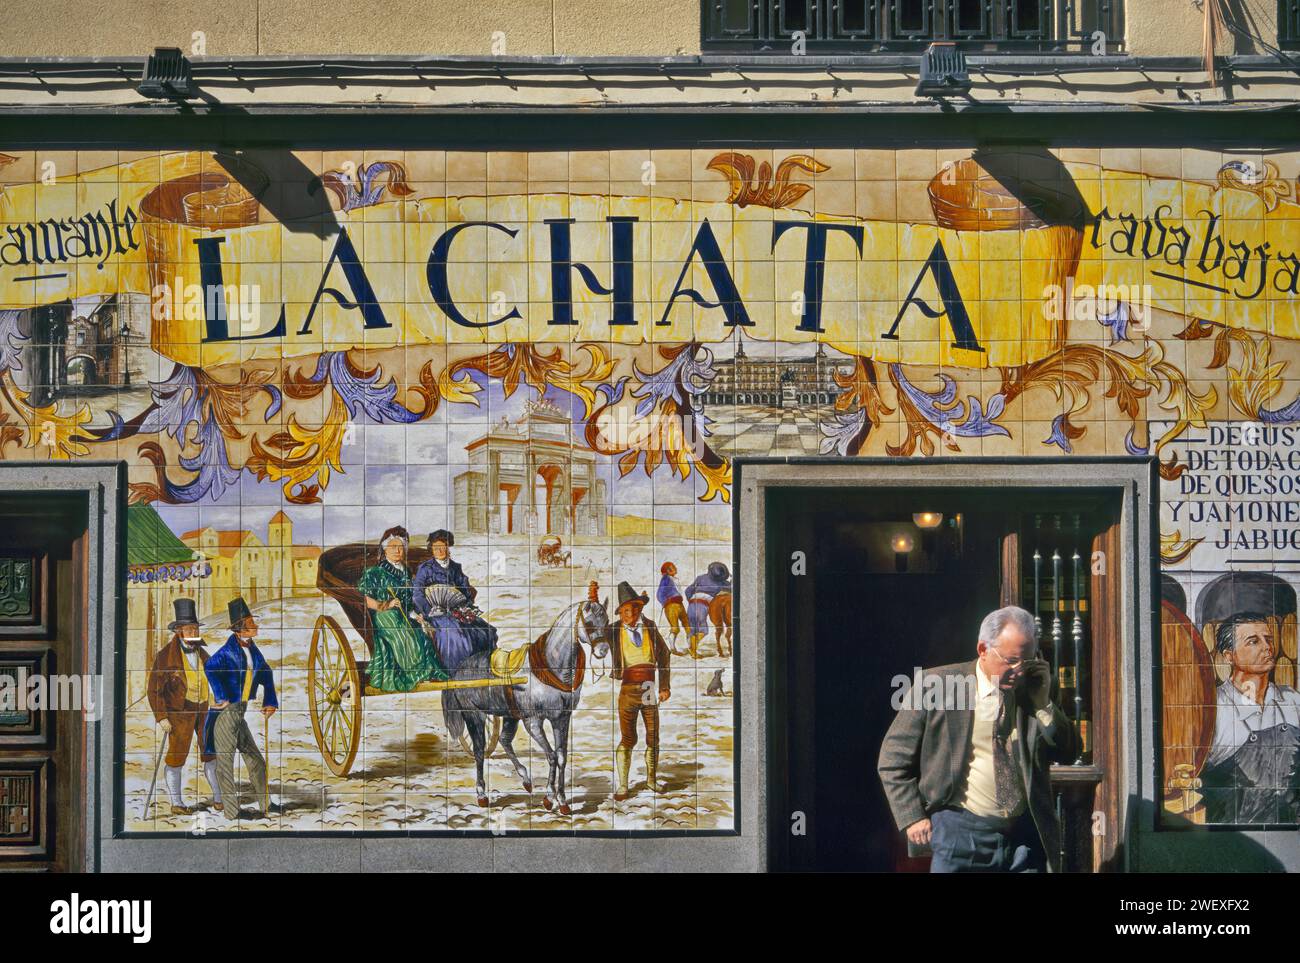 Azulejo tiled facade, man talking on cell phone, La Chata restaurant, Cava Baja, Madrid, Spain Stock Photo